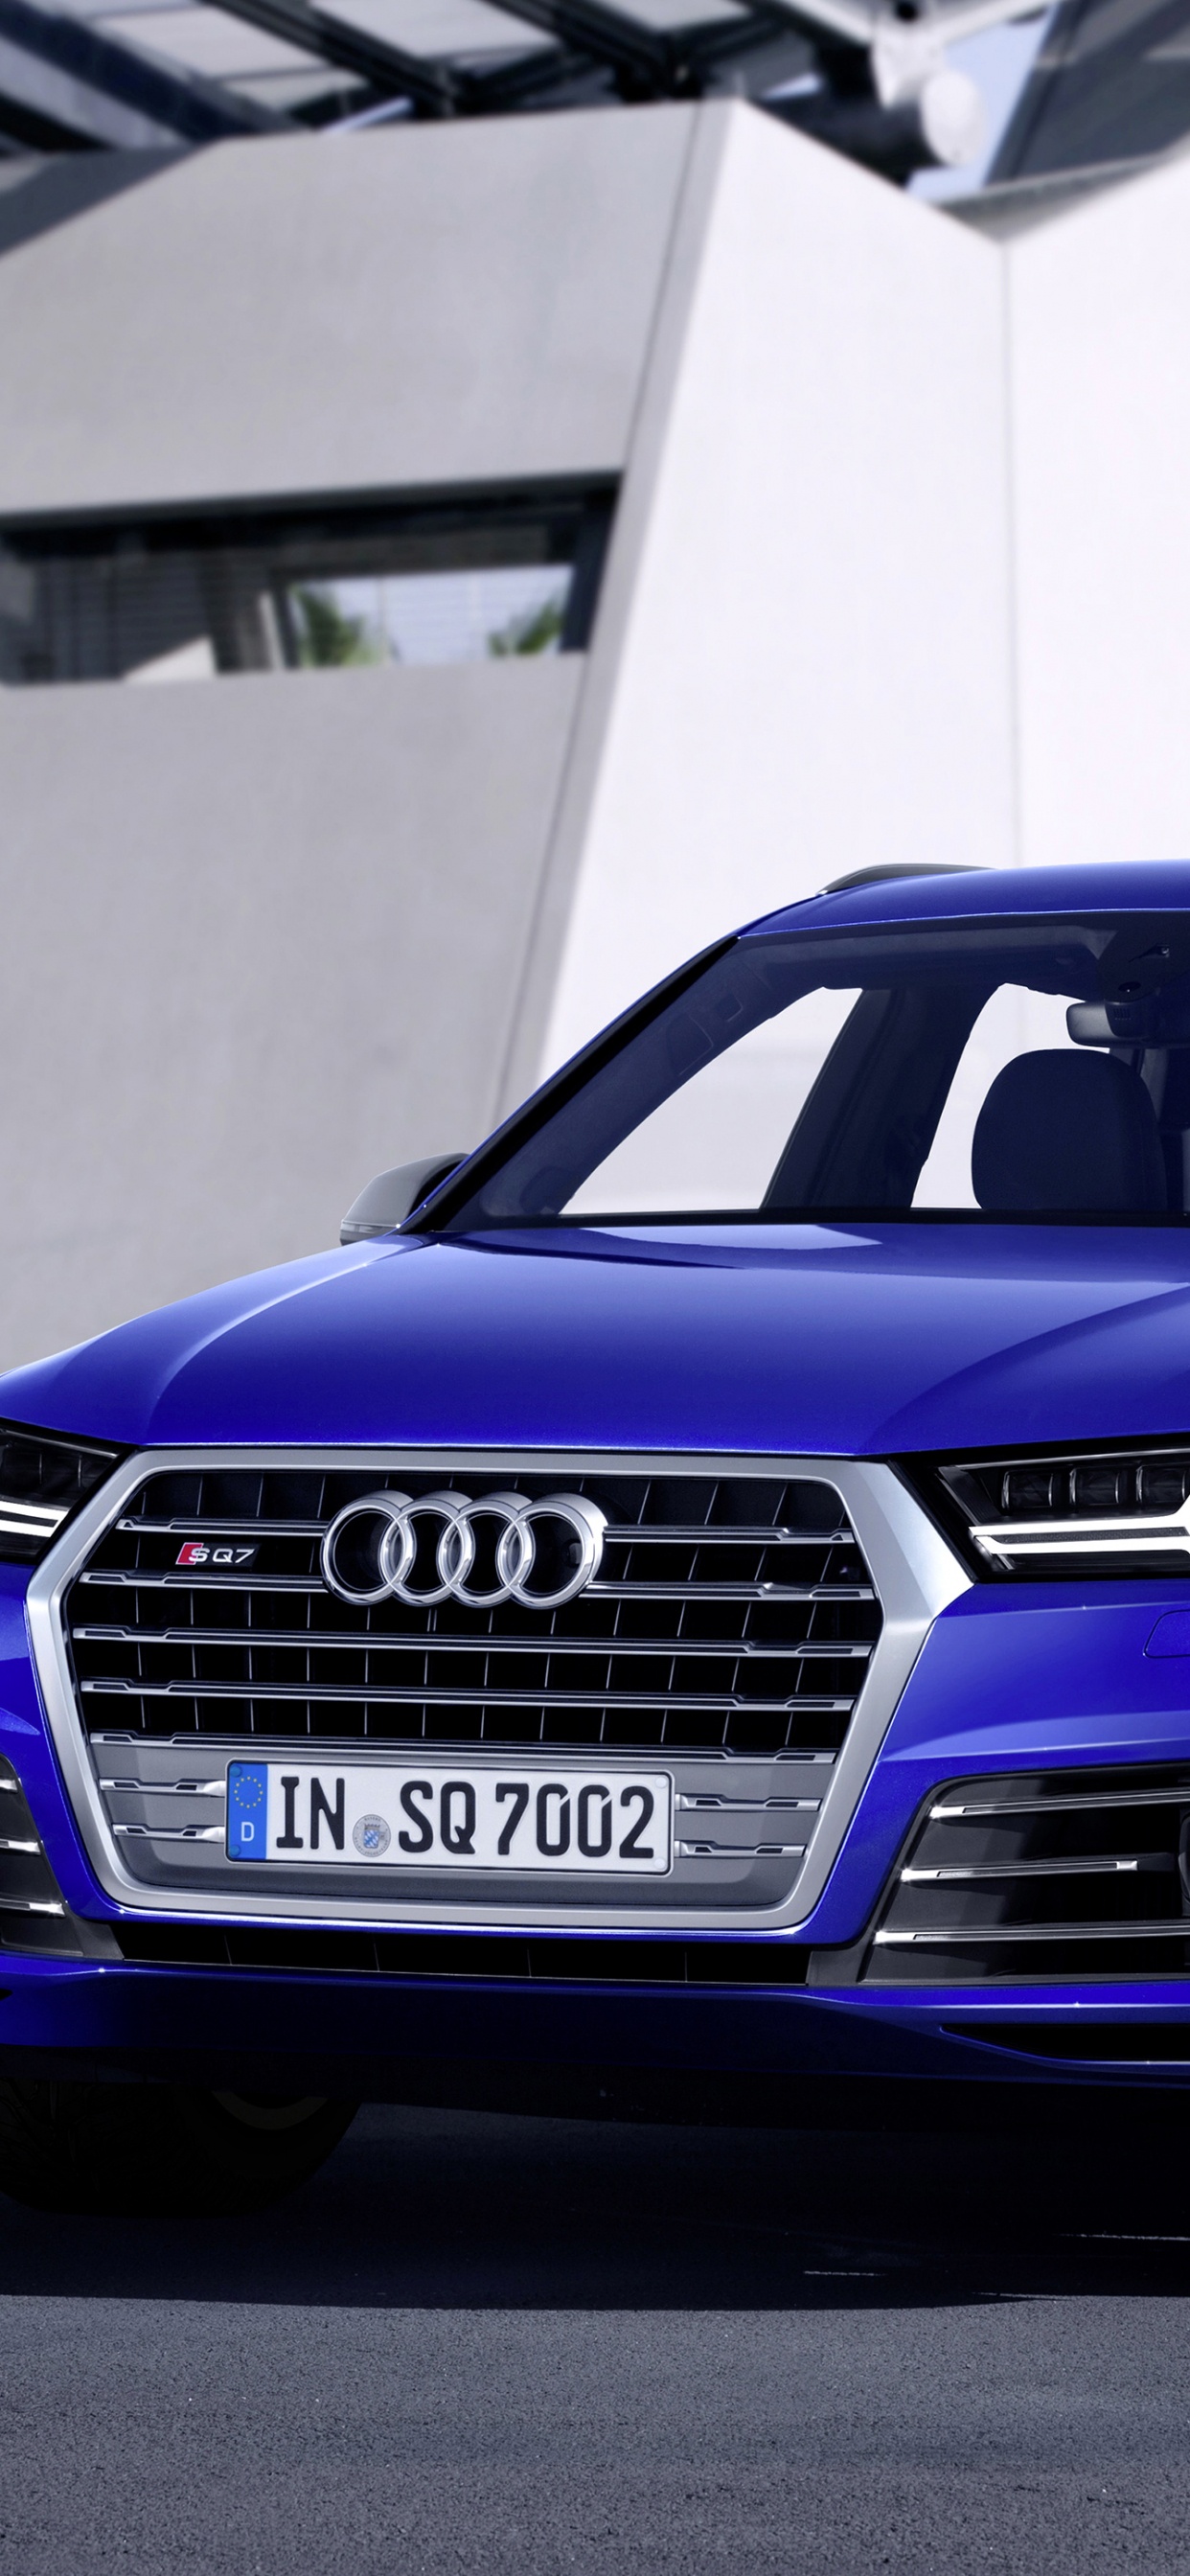 Grayscale Photo of Audi a 4 Sedan. Wallpaper in 1242x2688 Resolution